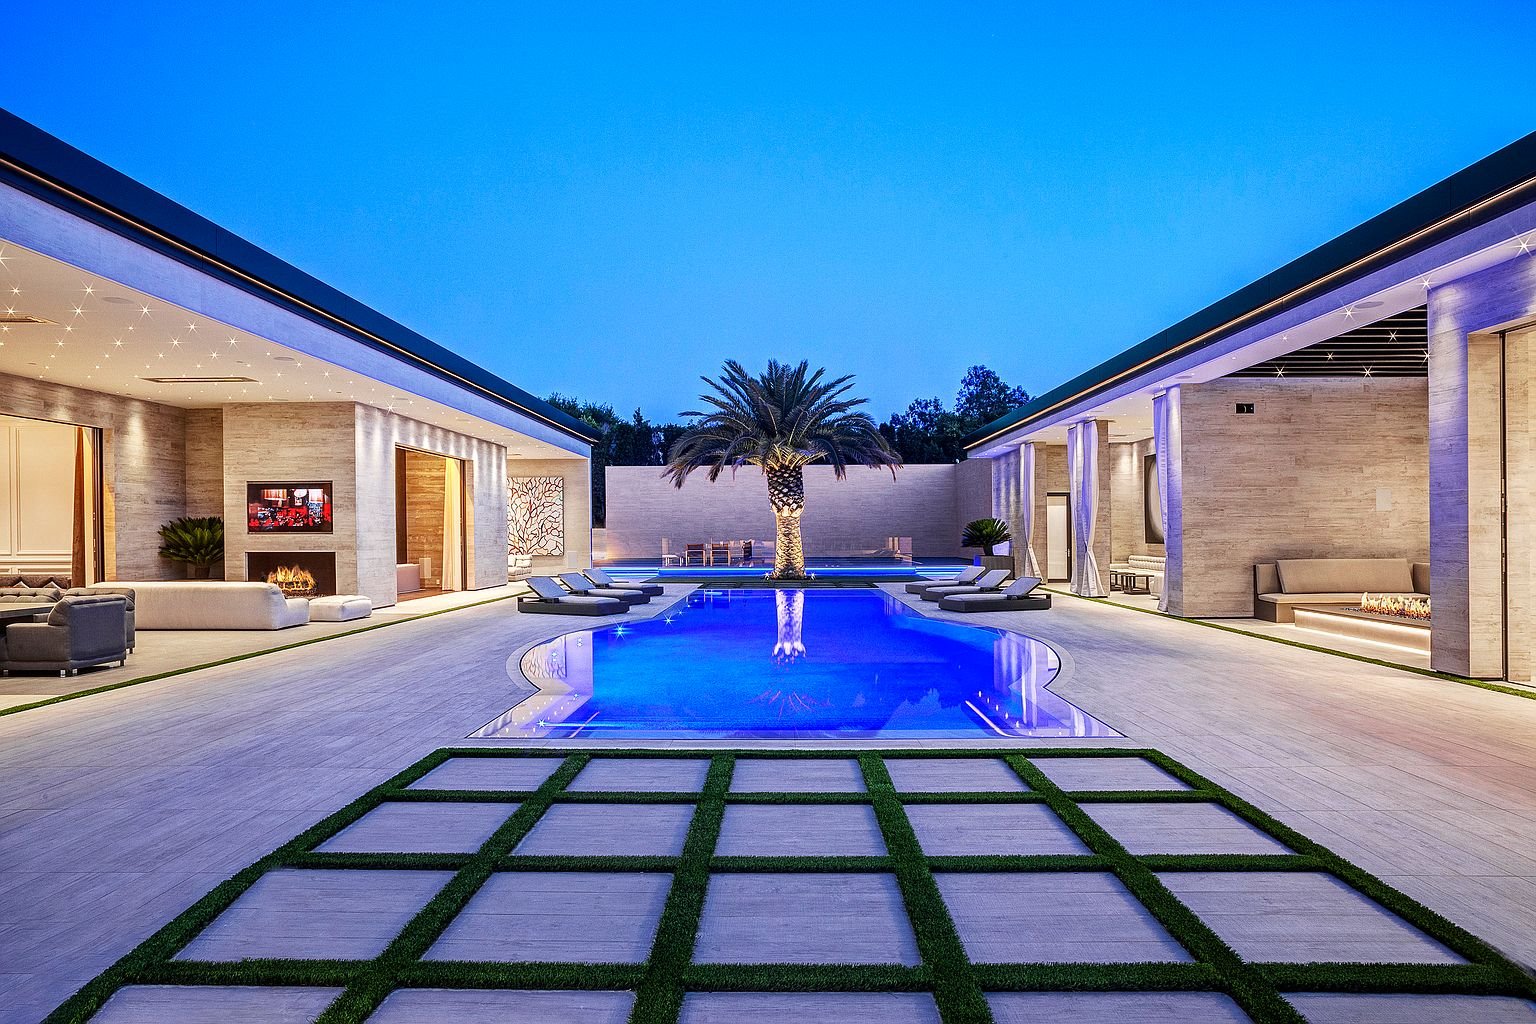 Casa Kylie Jenner en Holmby Hills jardín con piscina